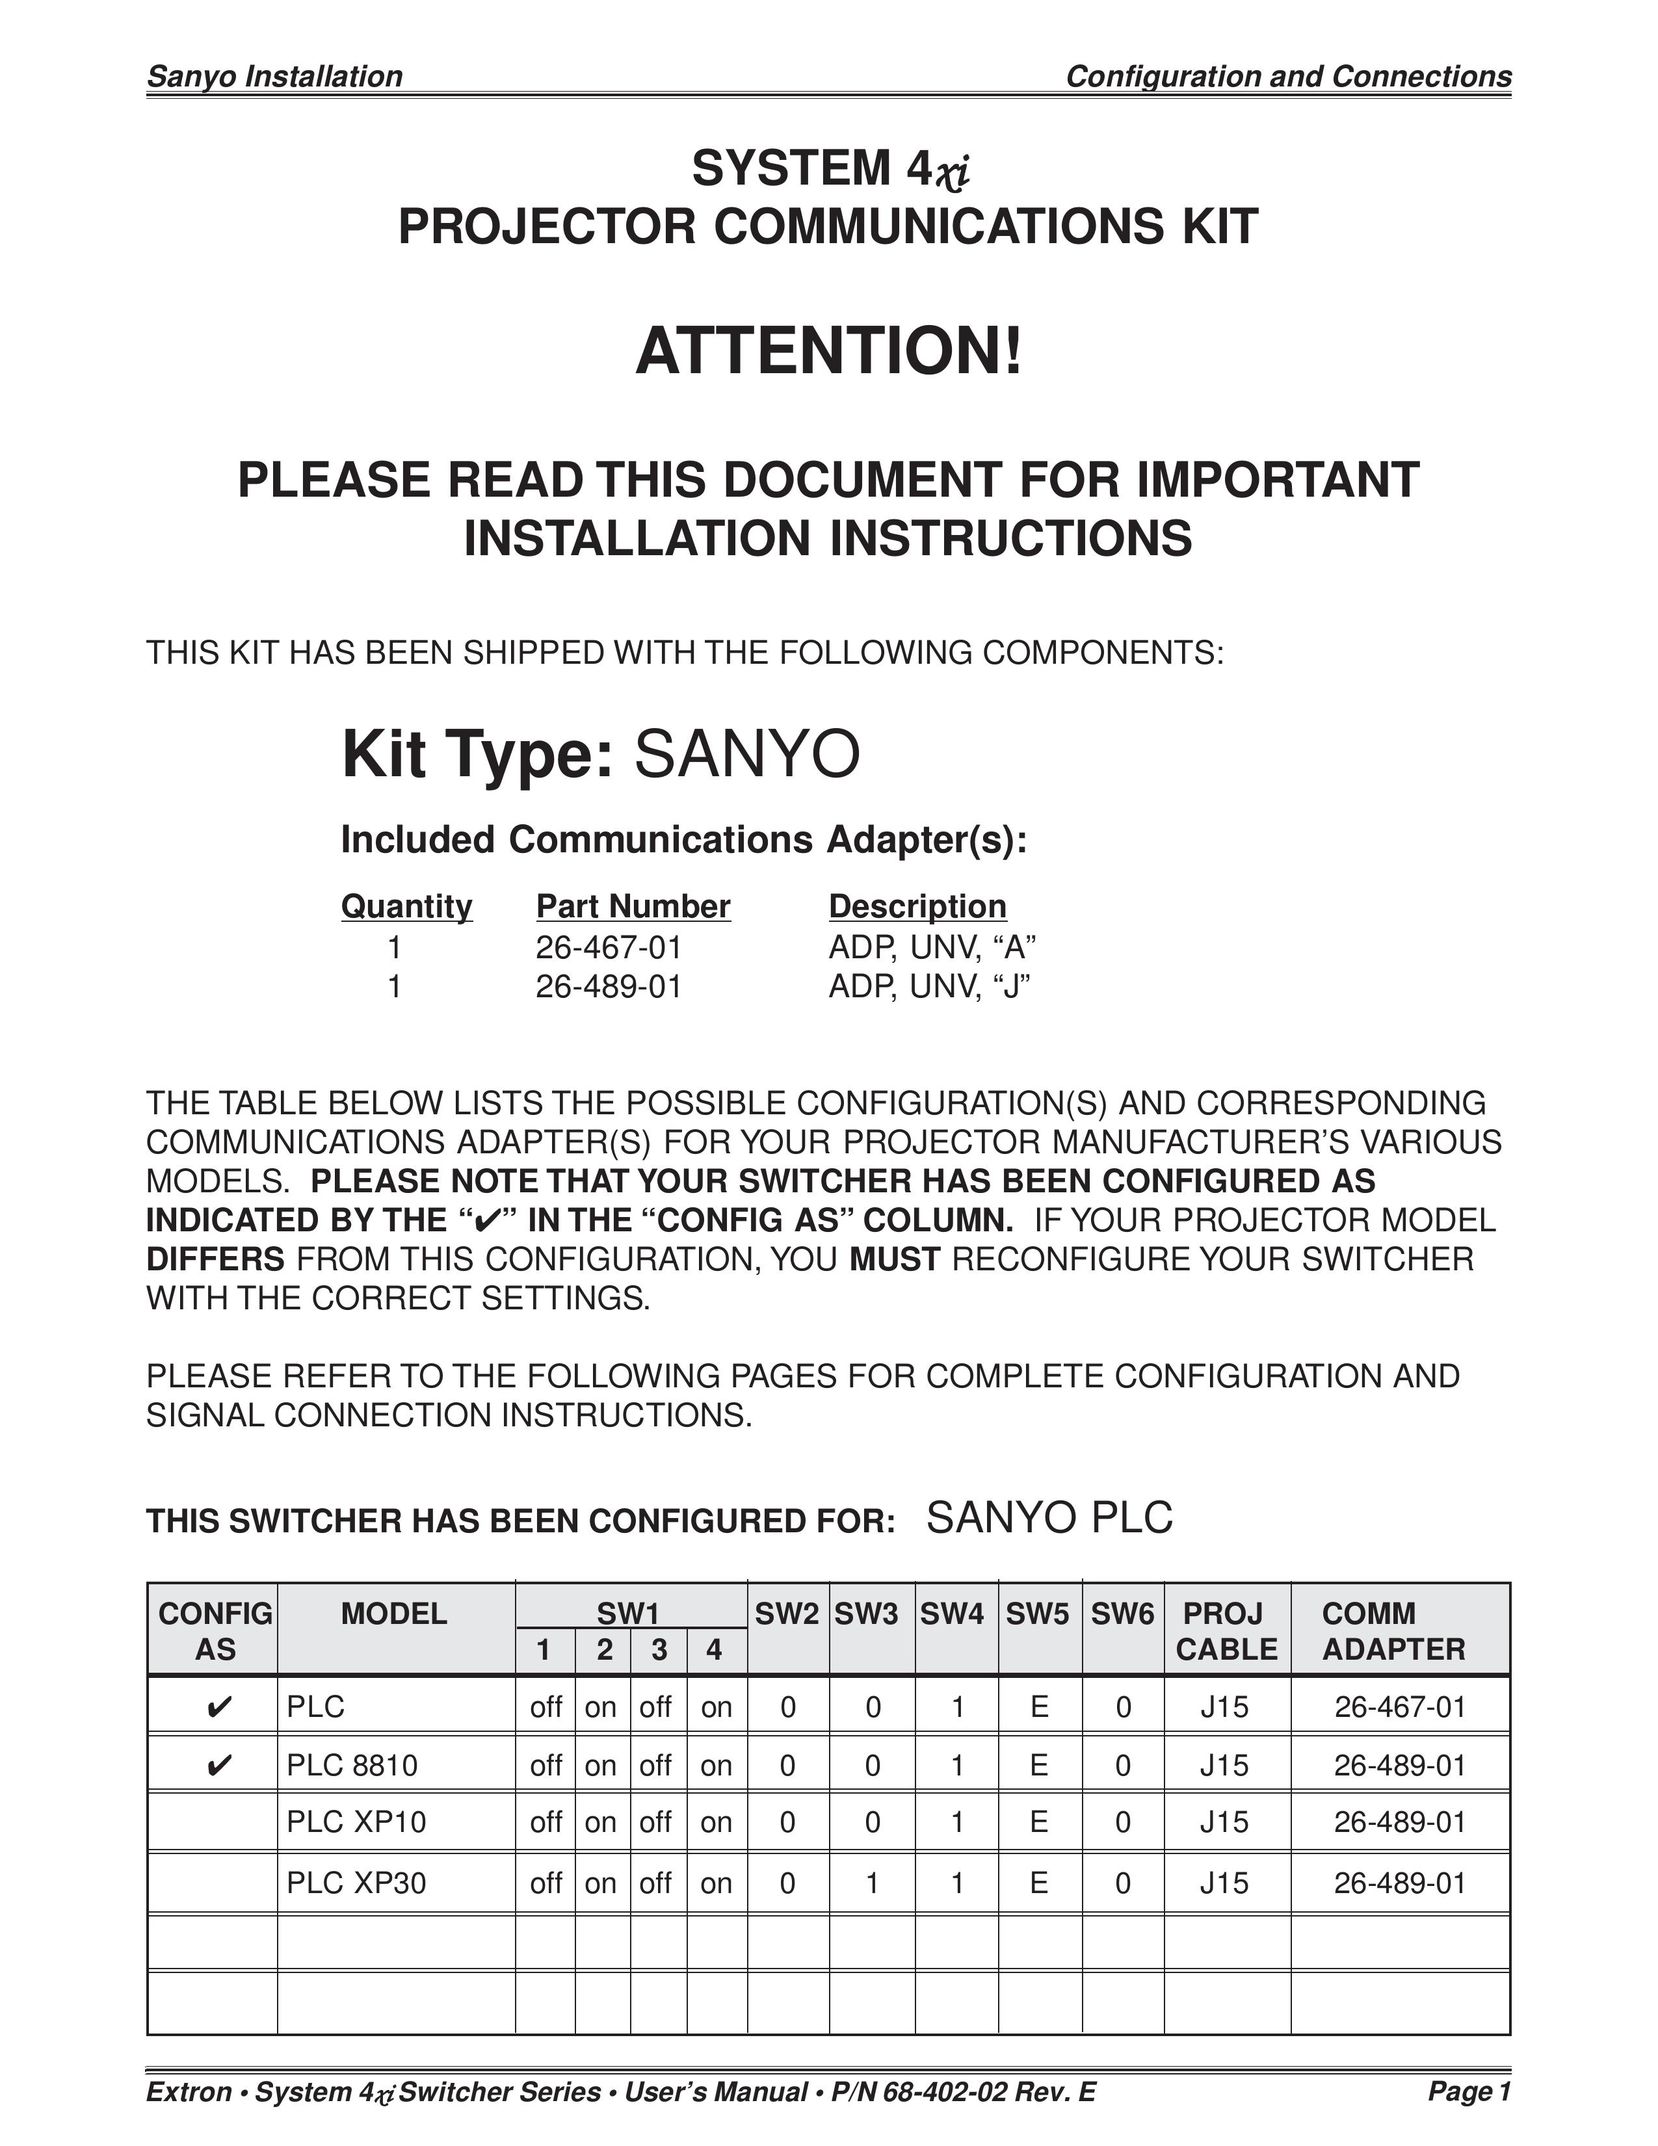 Sanyo PLC 8810 Projector User Manual